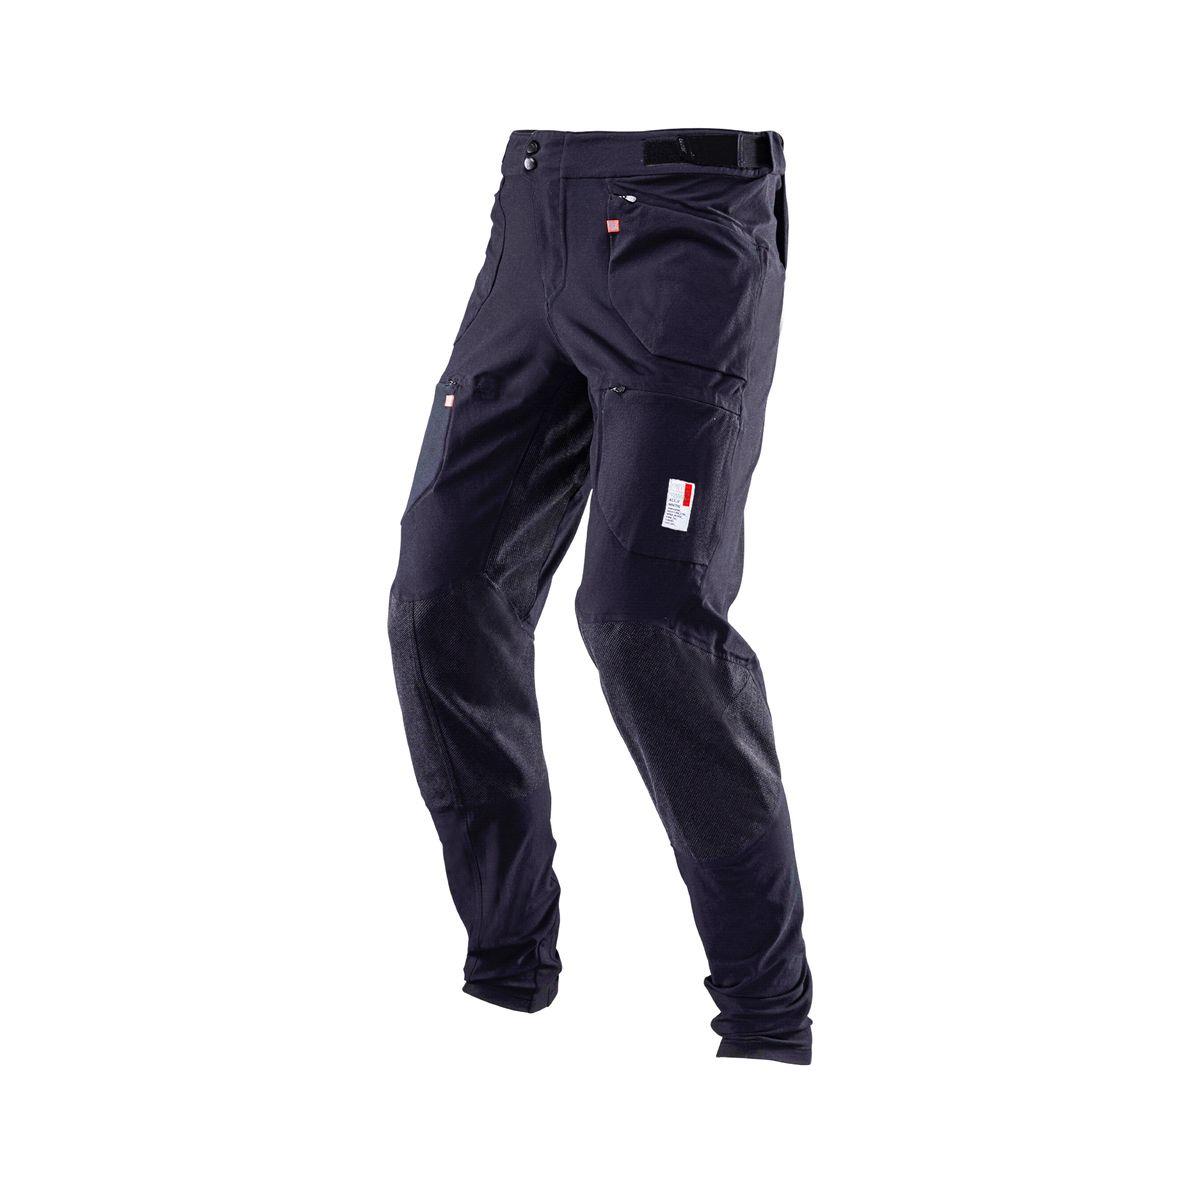 Pantalon VTT Allmtn 4.0 Long Noir Taille XS